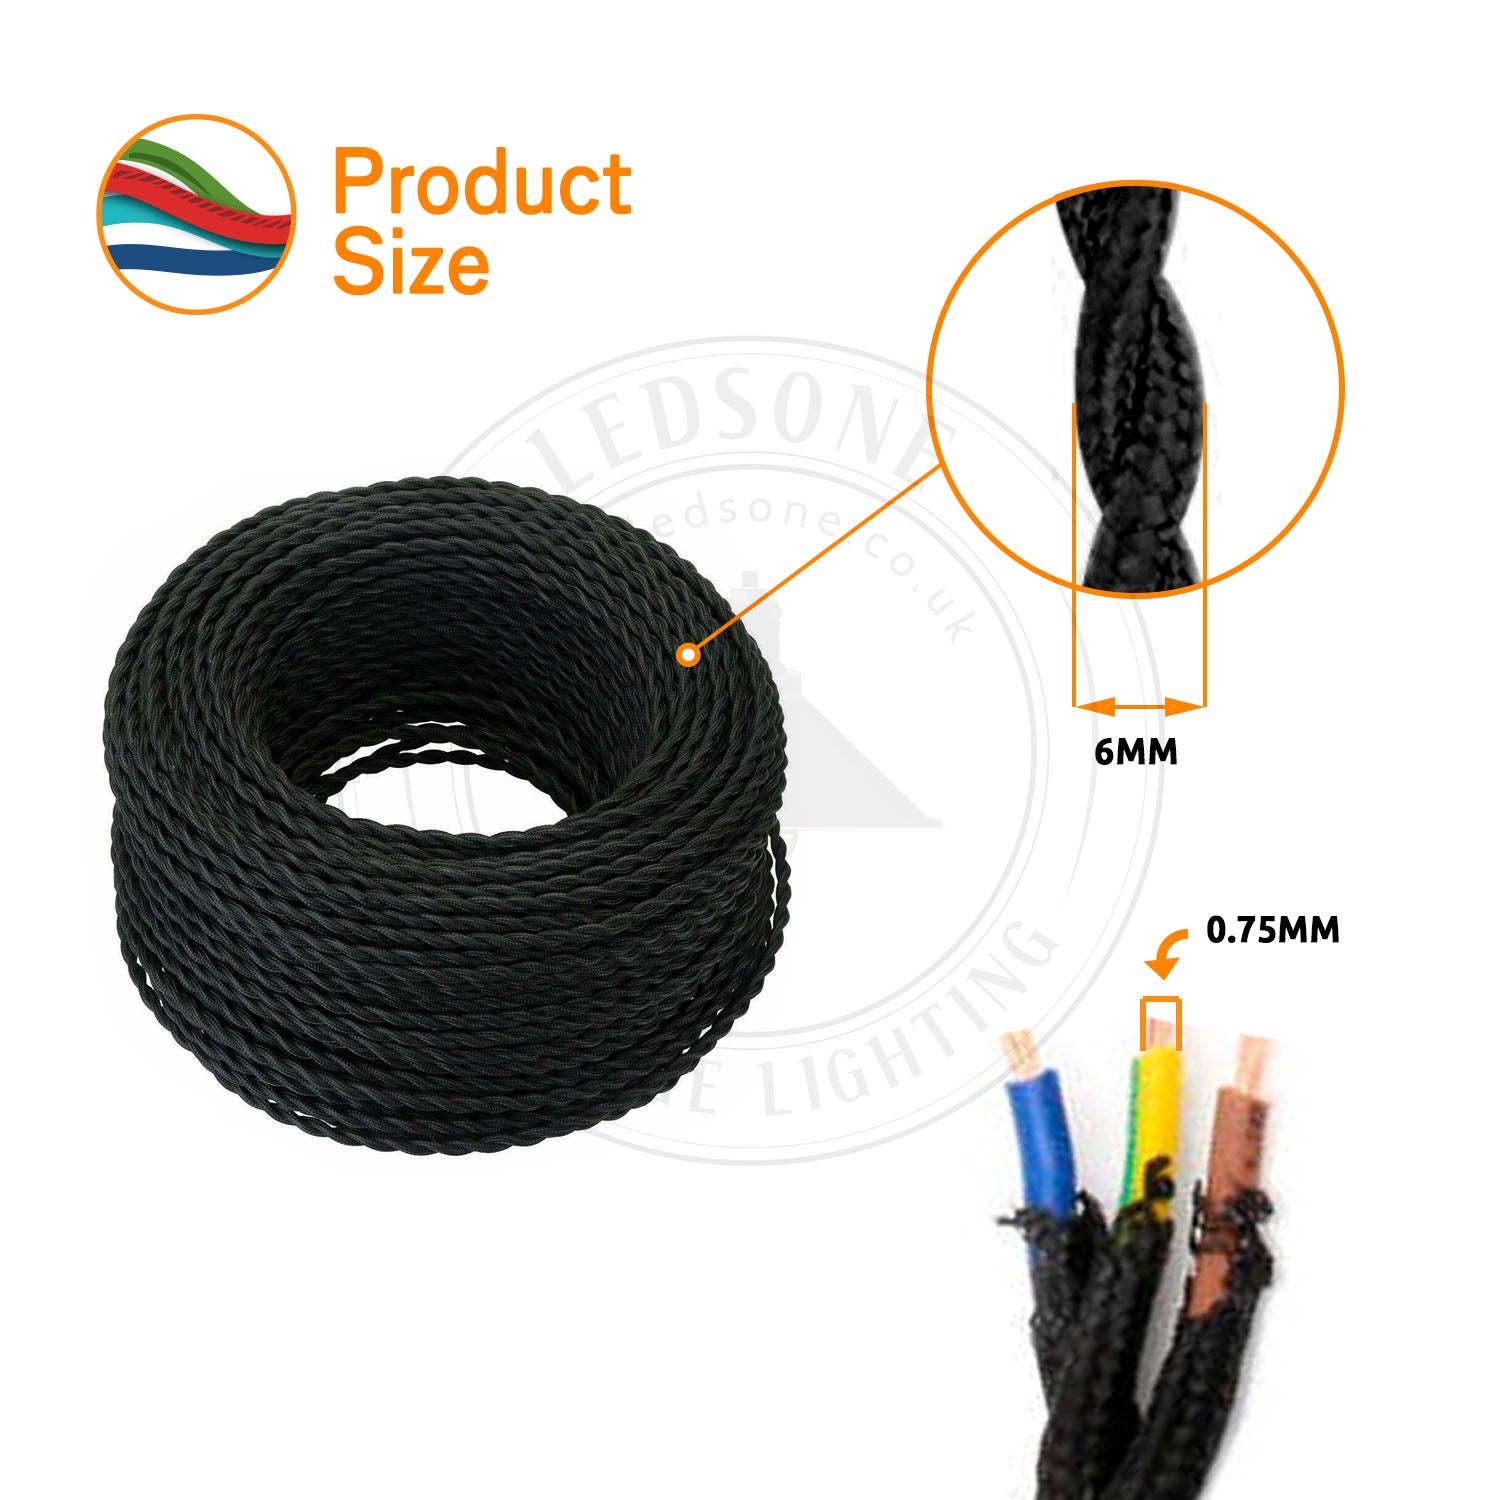 Black Fabric Cable.JPG